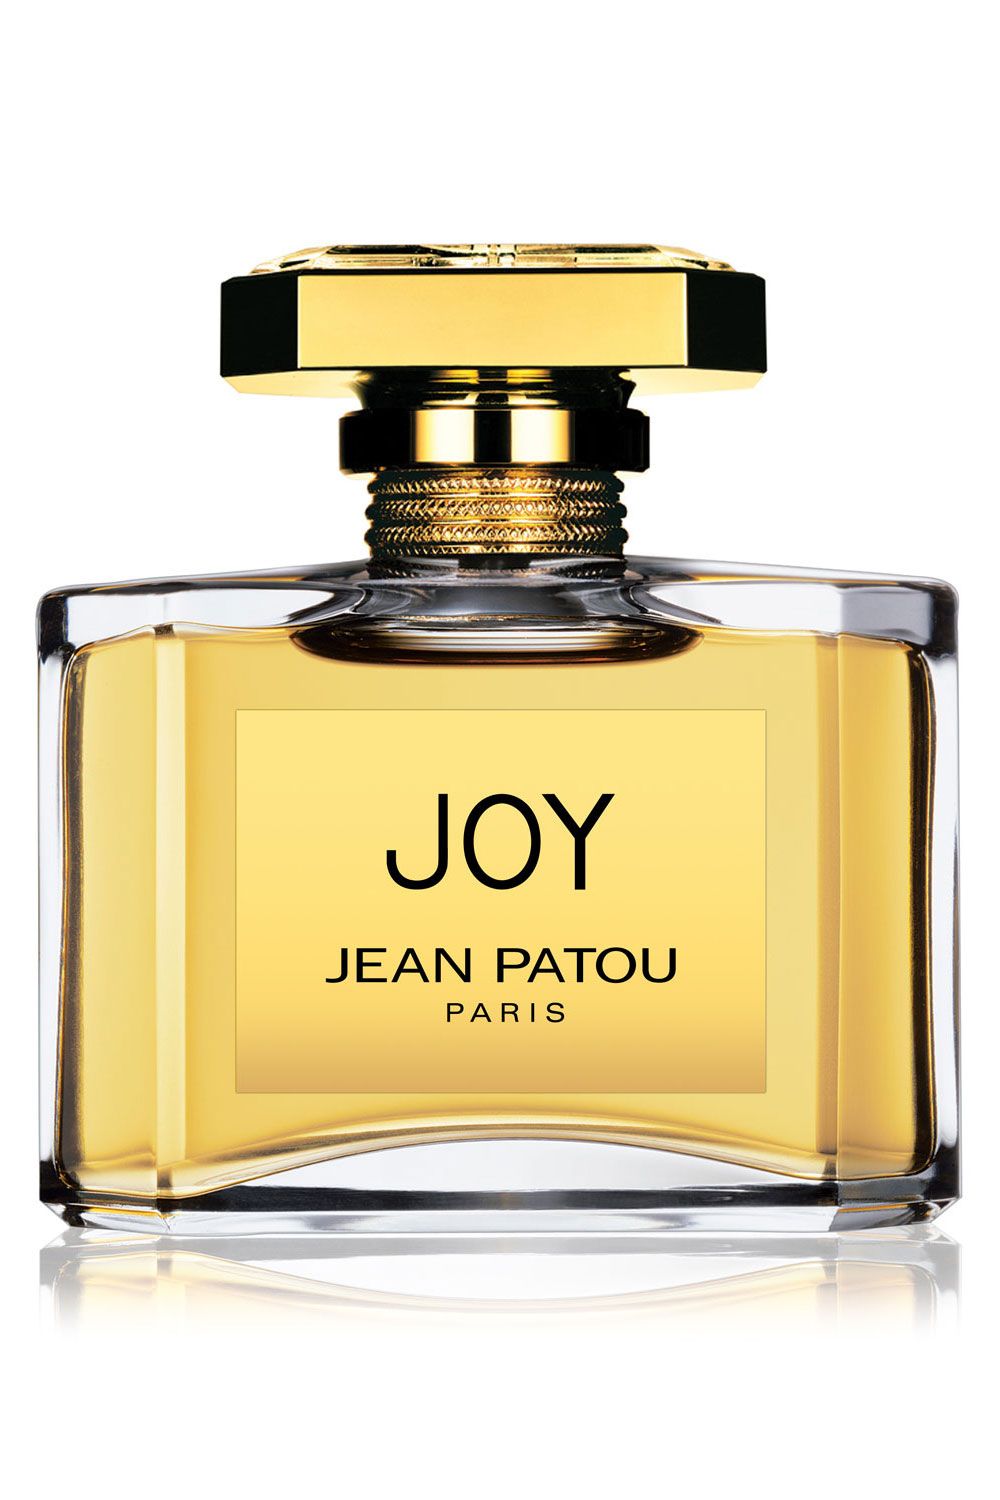 joy chanel perfume